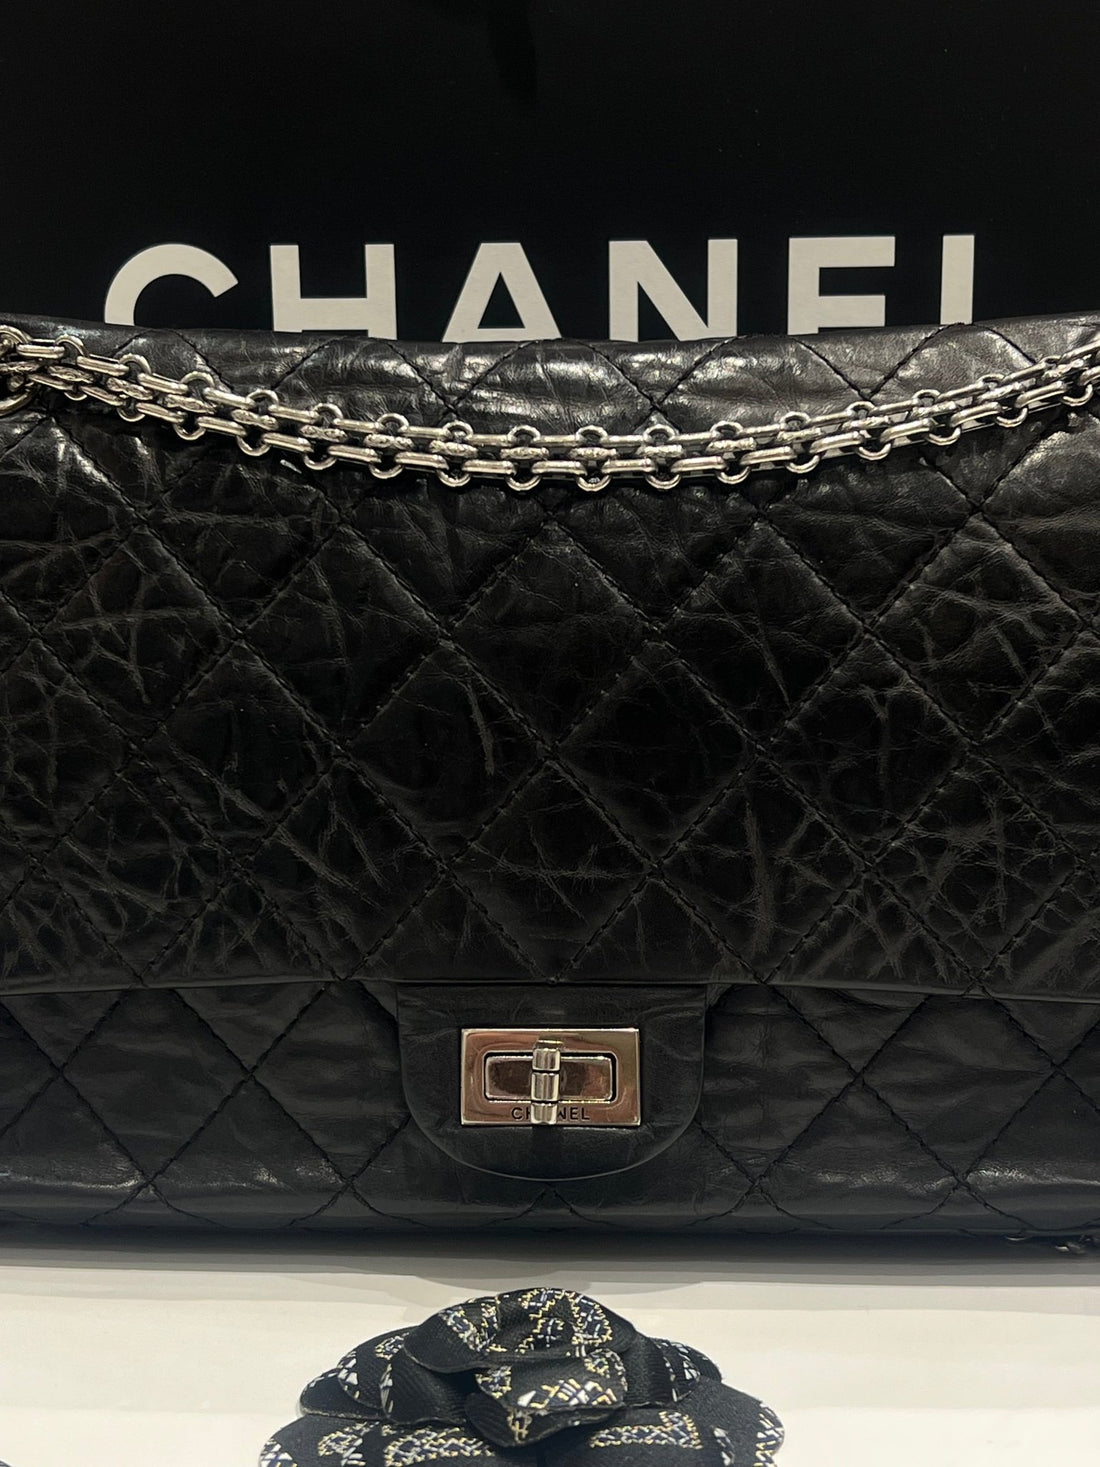 Chanel - sac 2 55 grand modèle 226 cuir vieilli noir - Les Folies d&